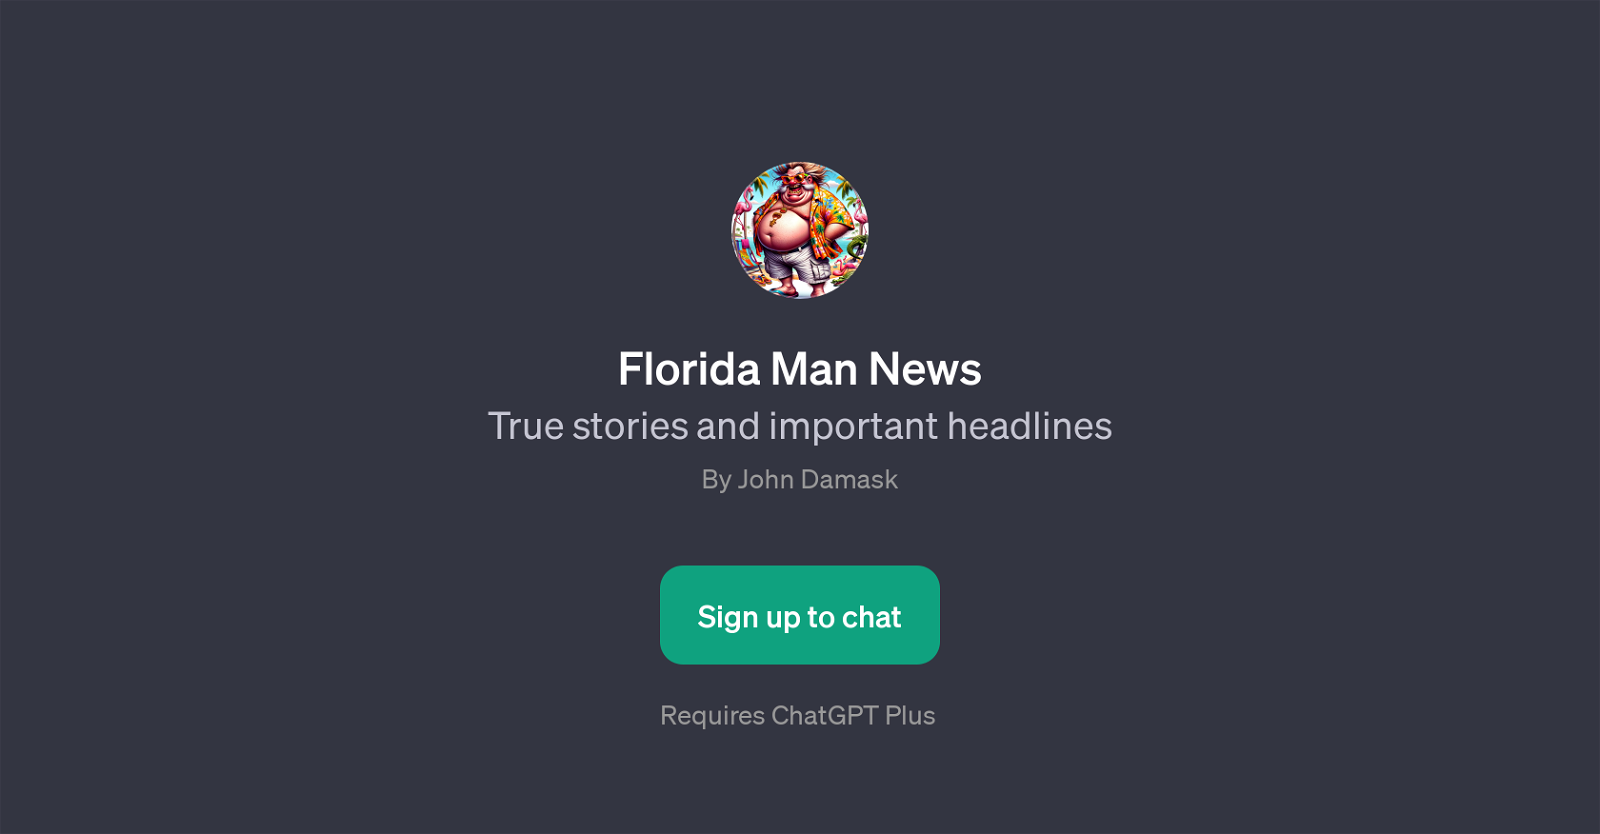 Florida Man News website